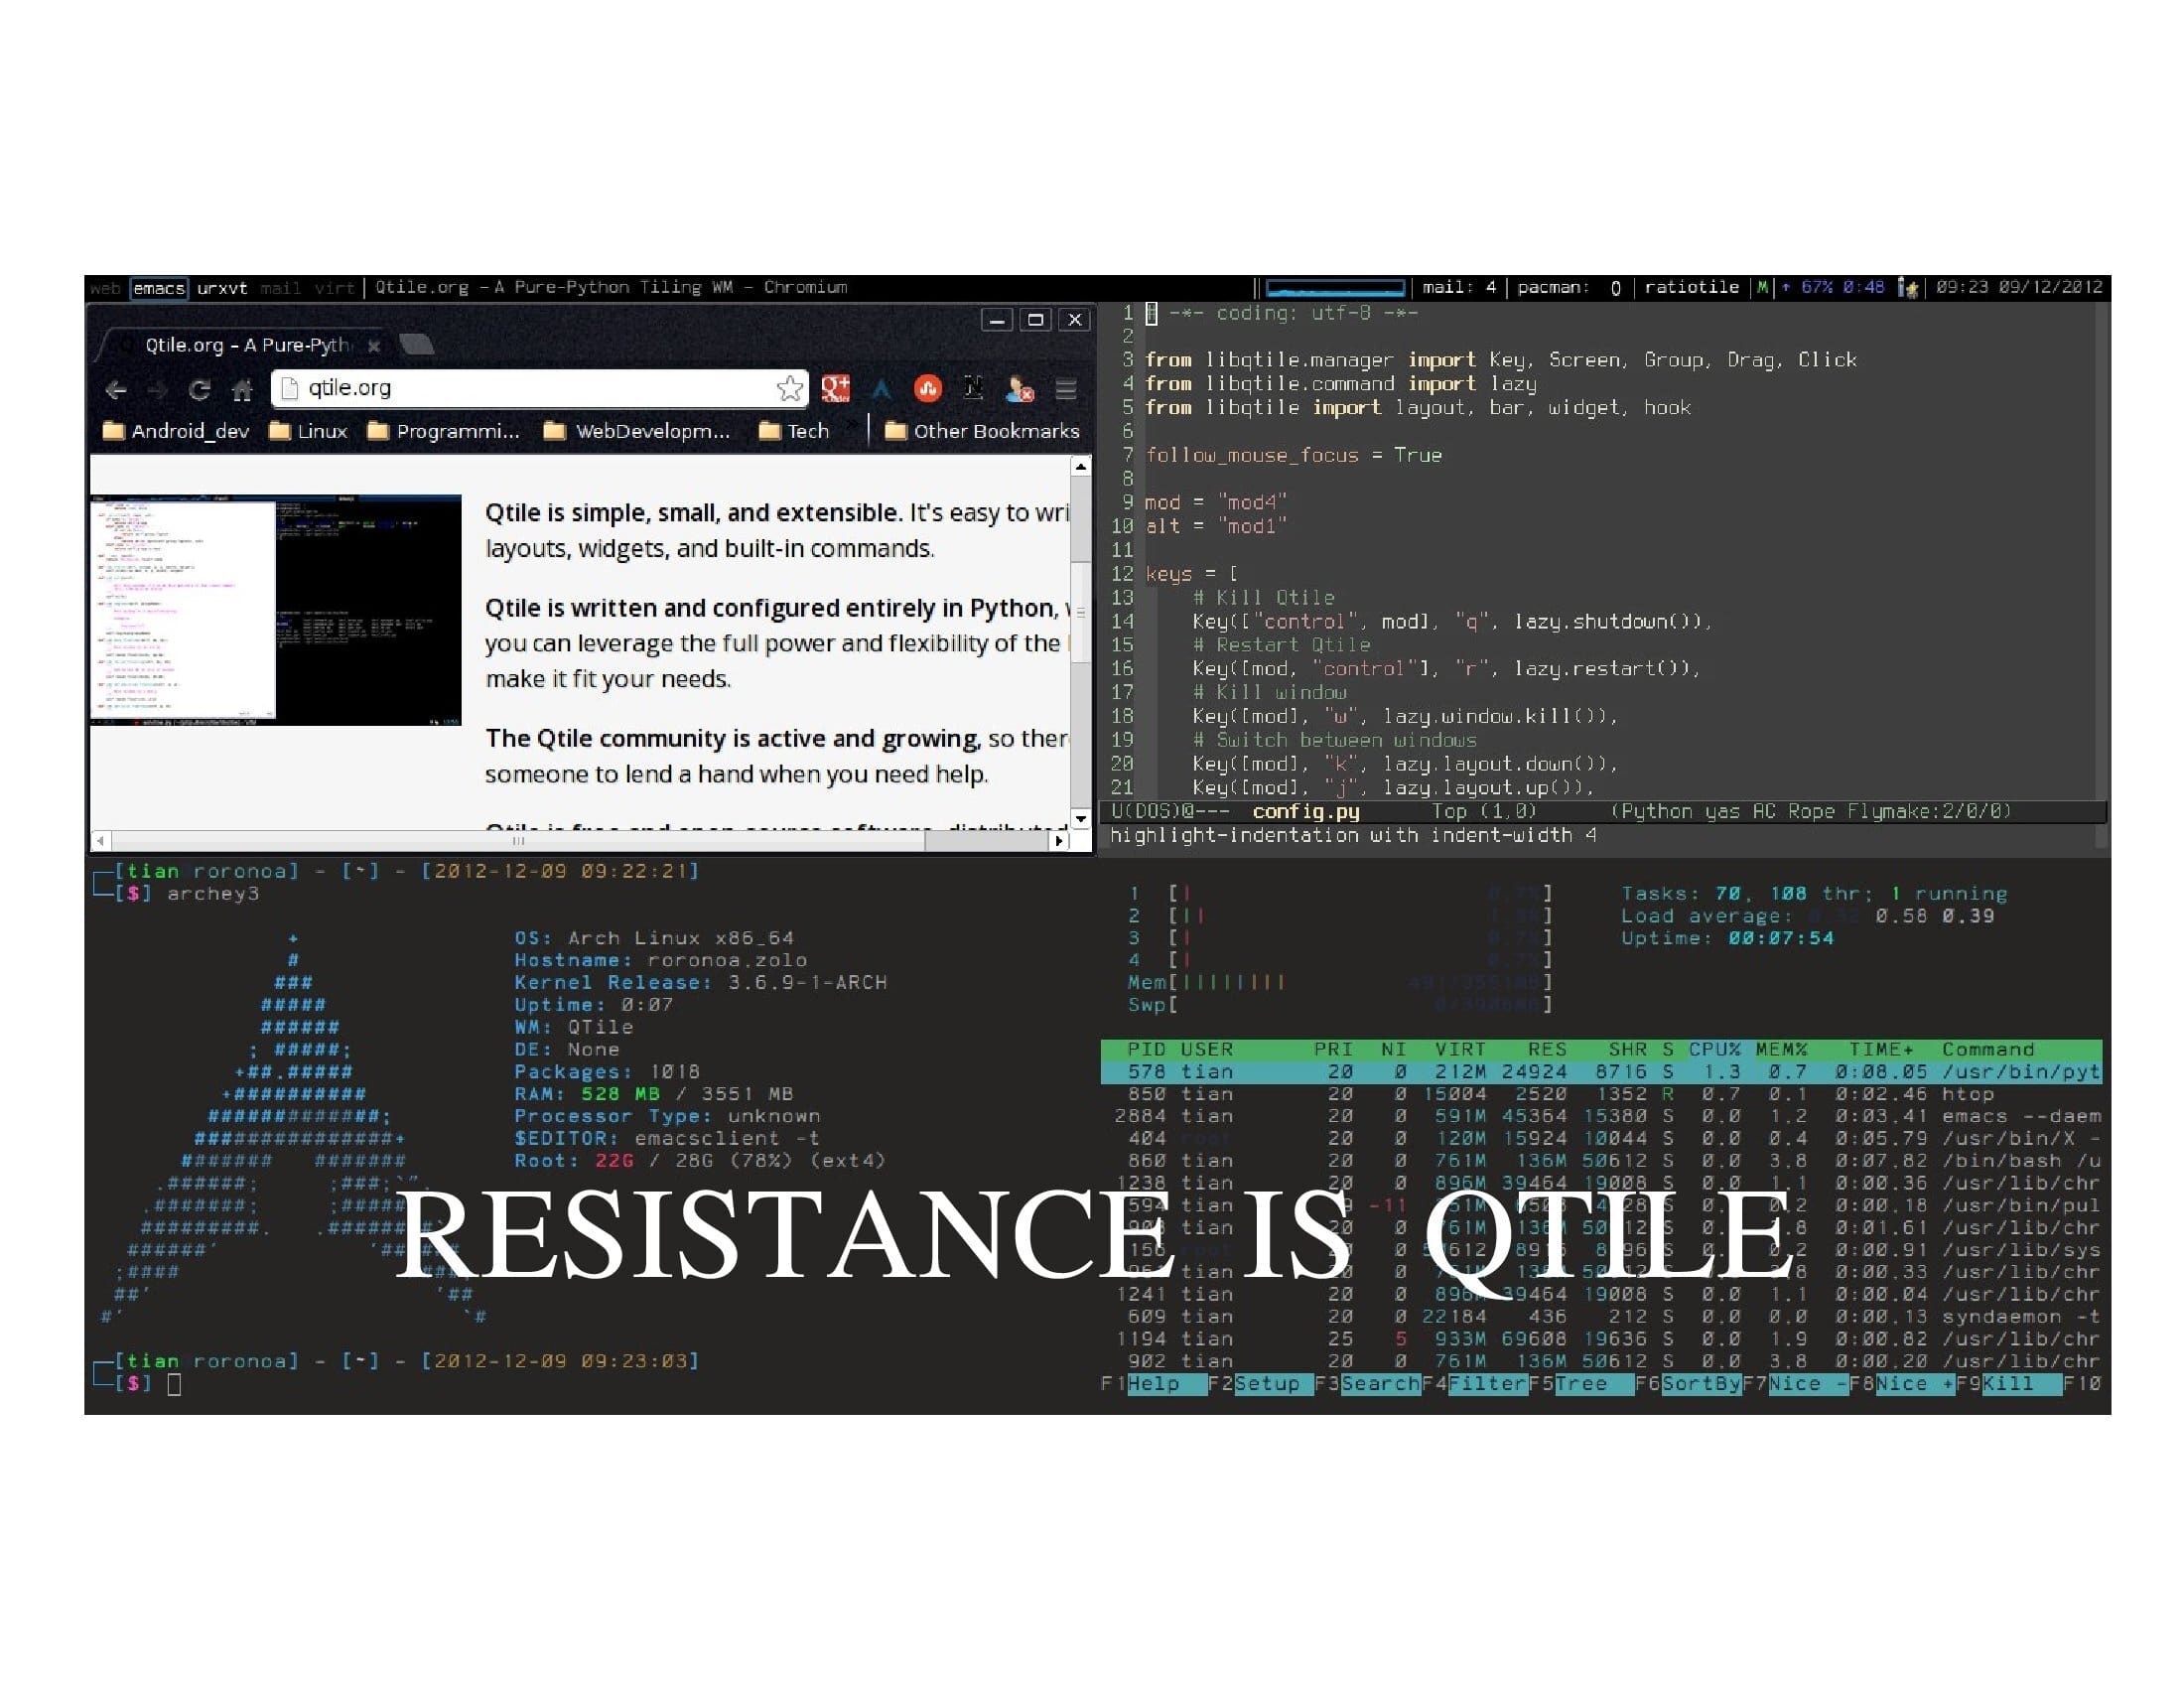 Resistance is qtile.jpg